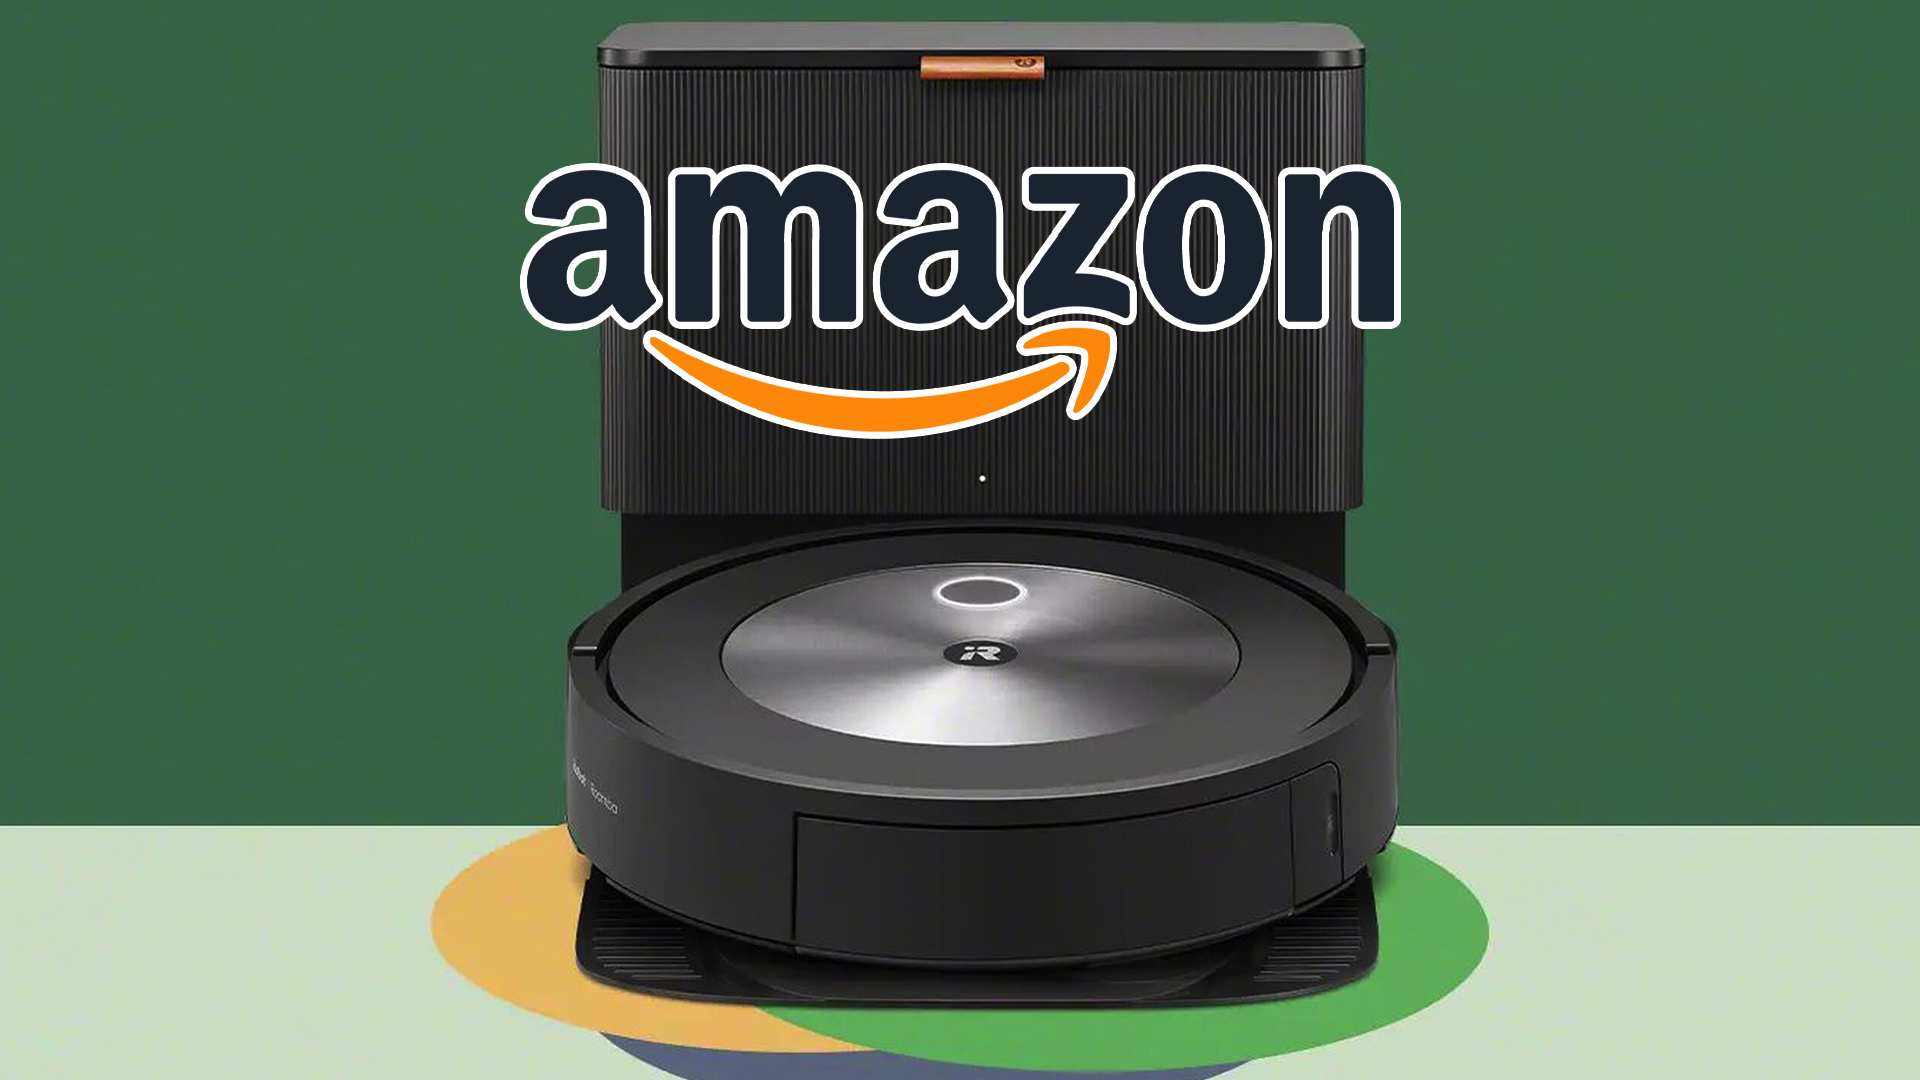 Amazon to Acquire the Roomba Company in Billion-Dollar Deal